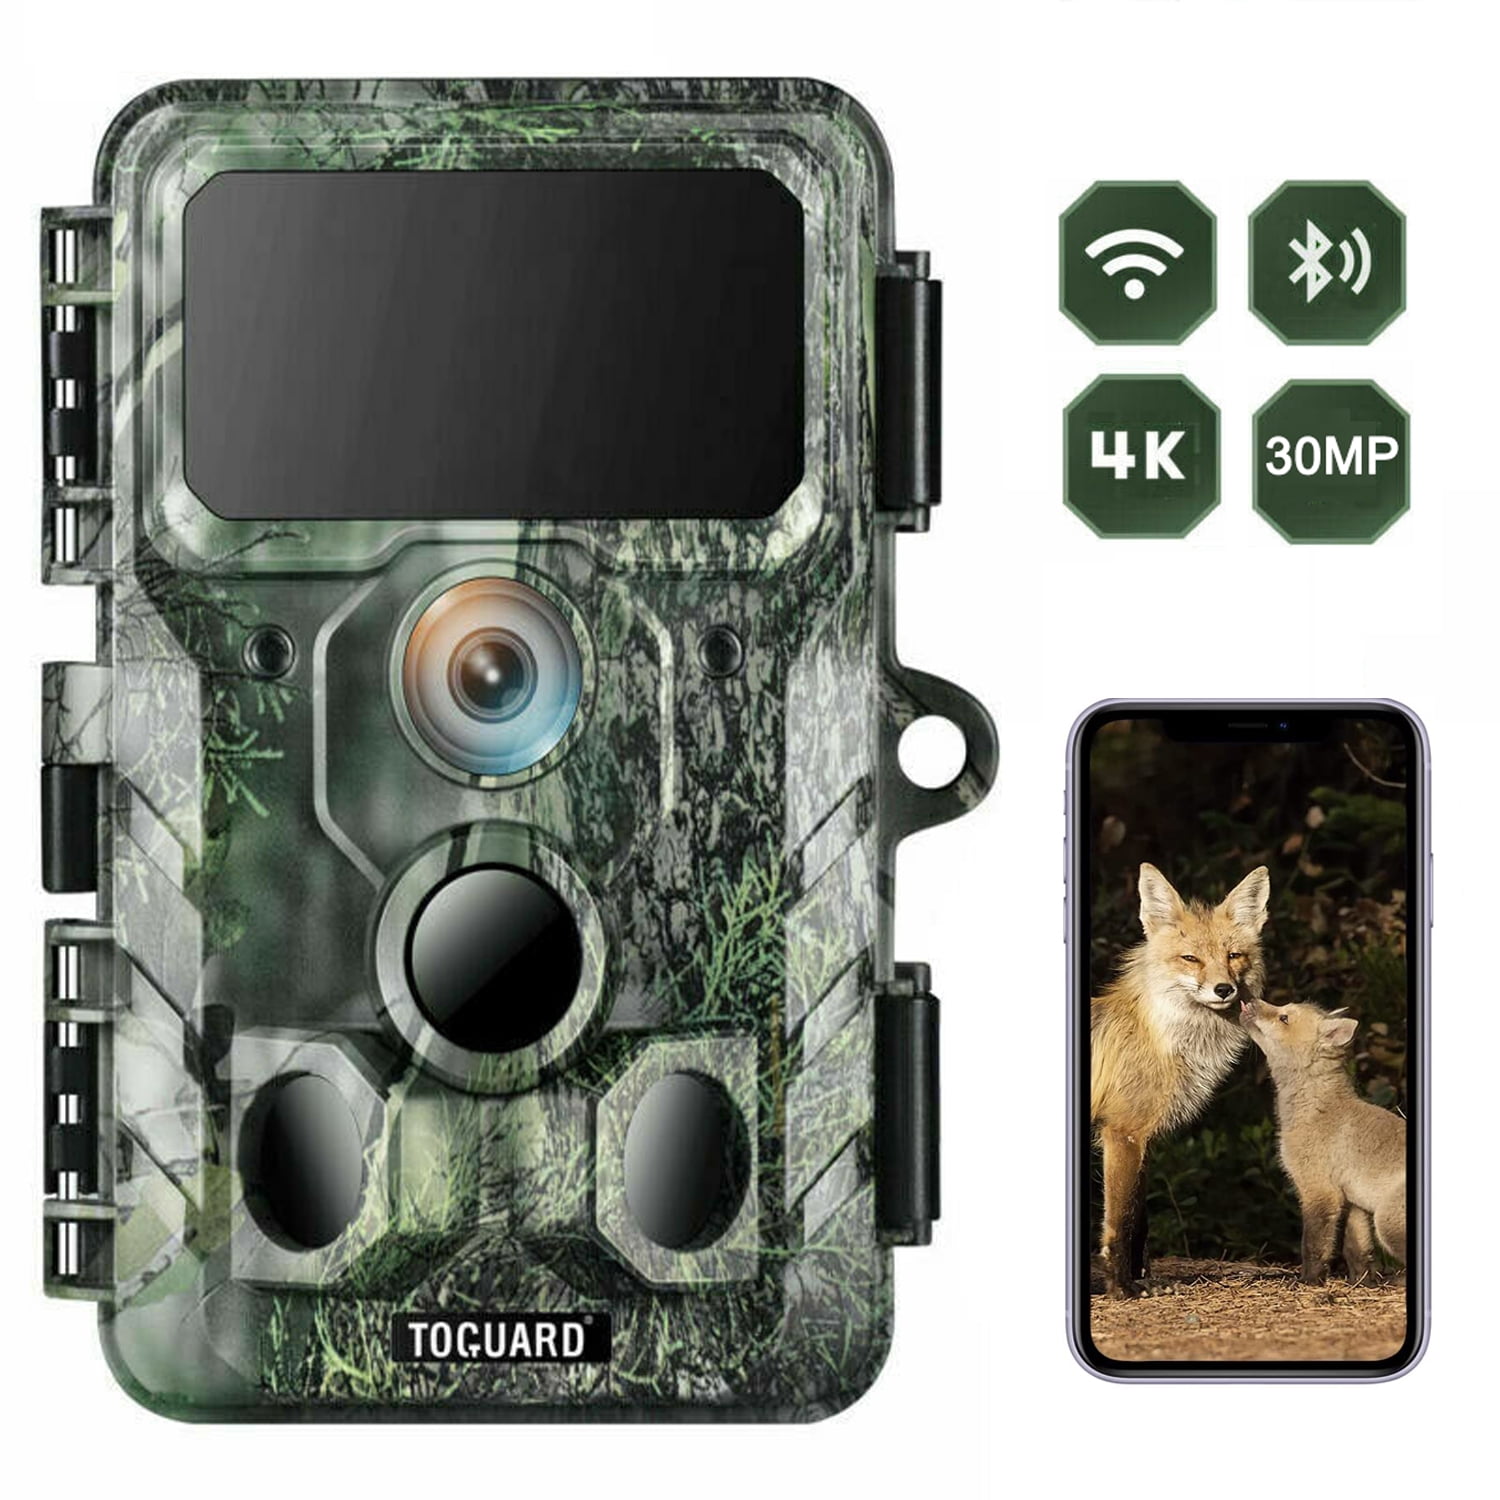 Campark WiFi Bluetooth Trail Camera 20MP 1296P FHD Game Cam No Glow Night Vision 